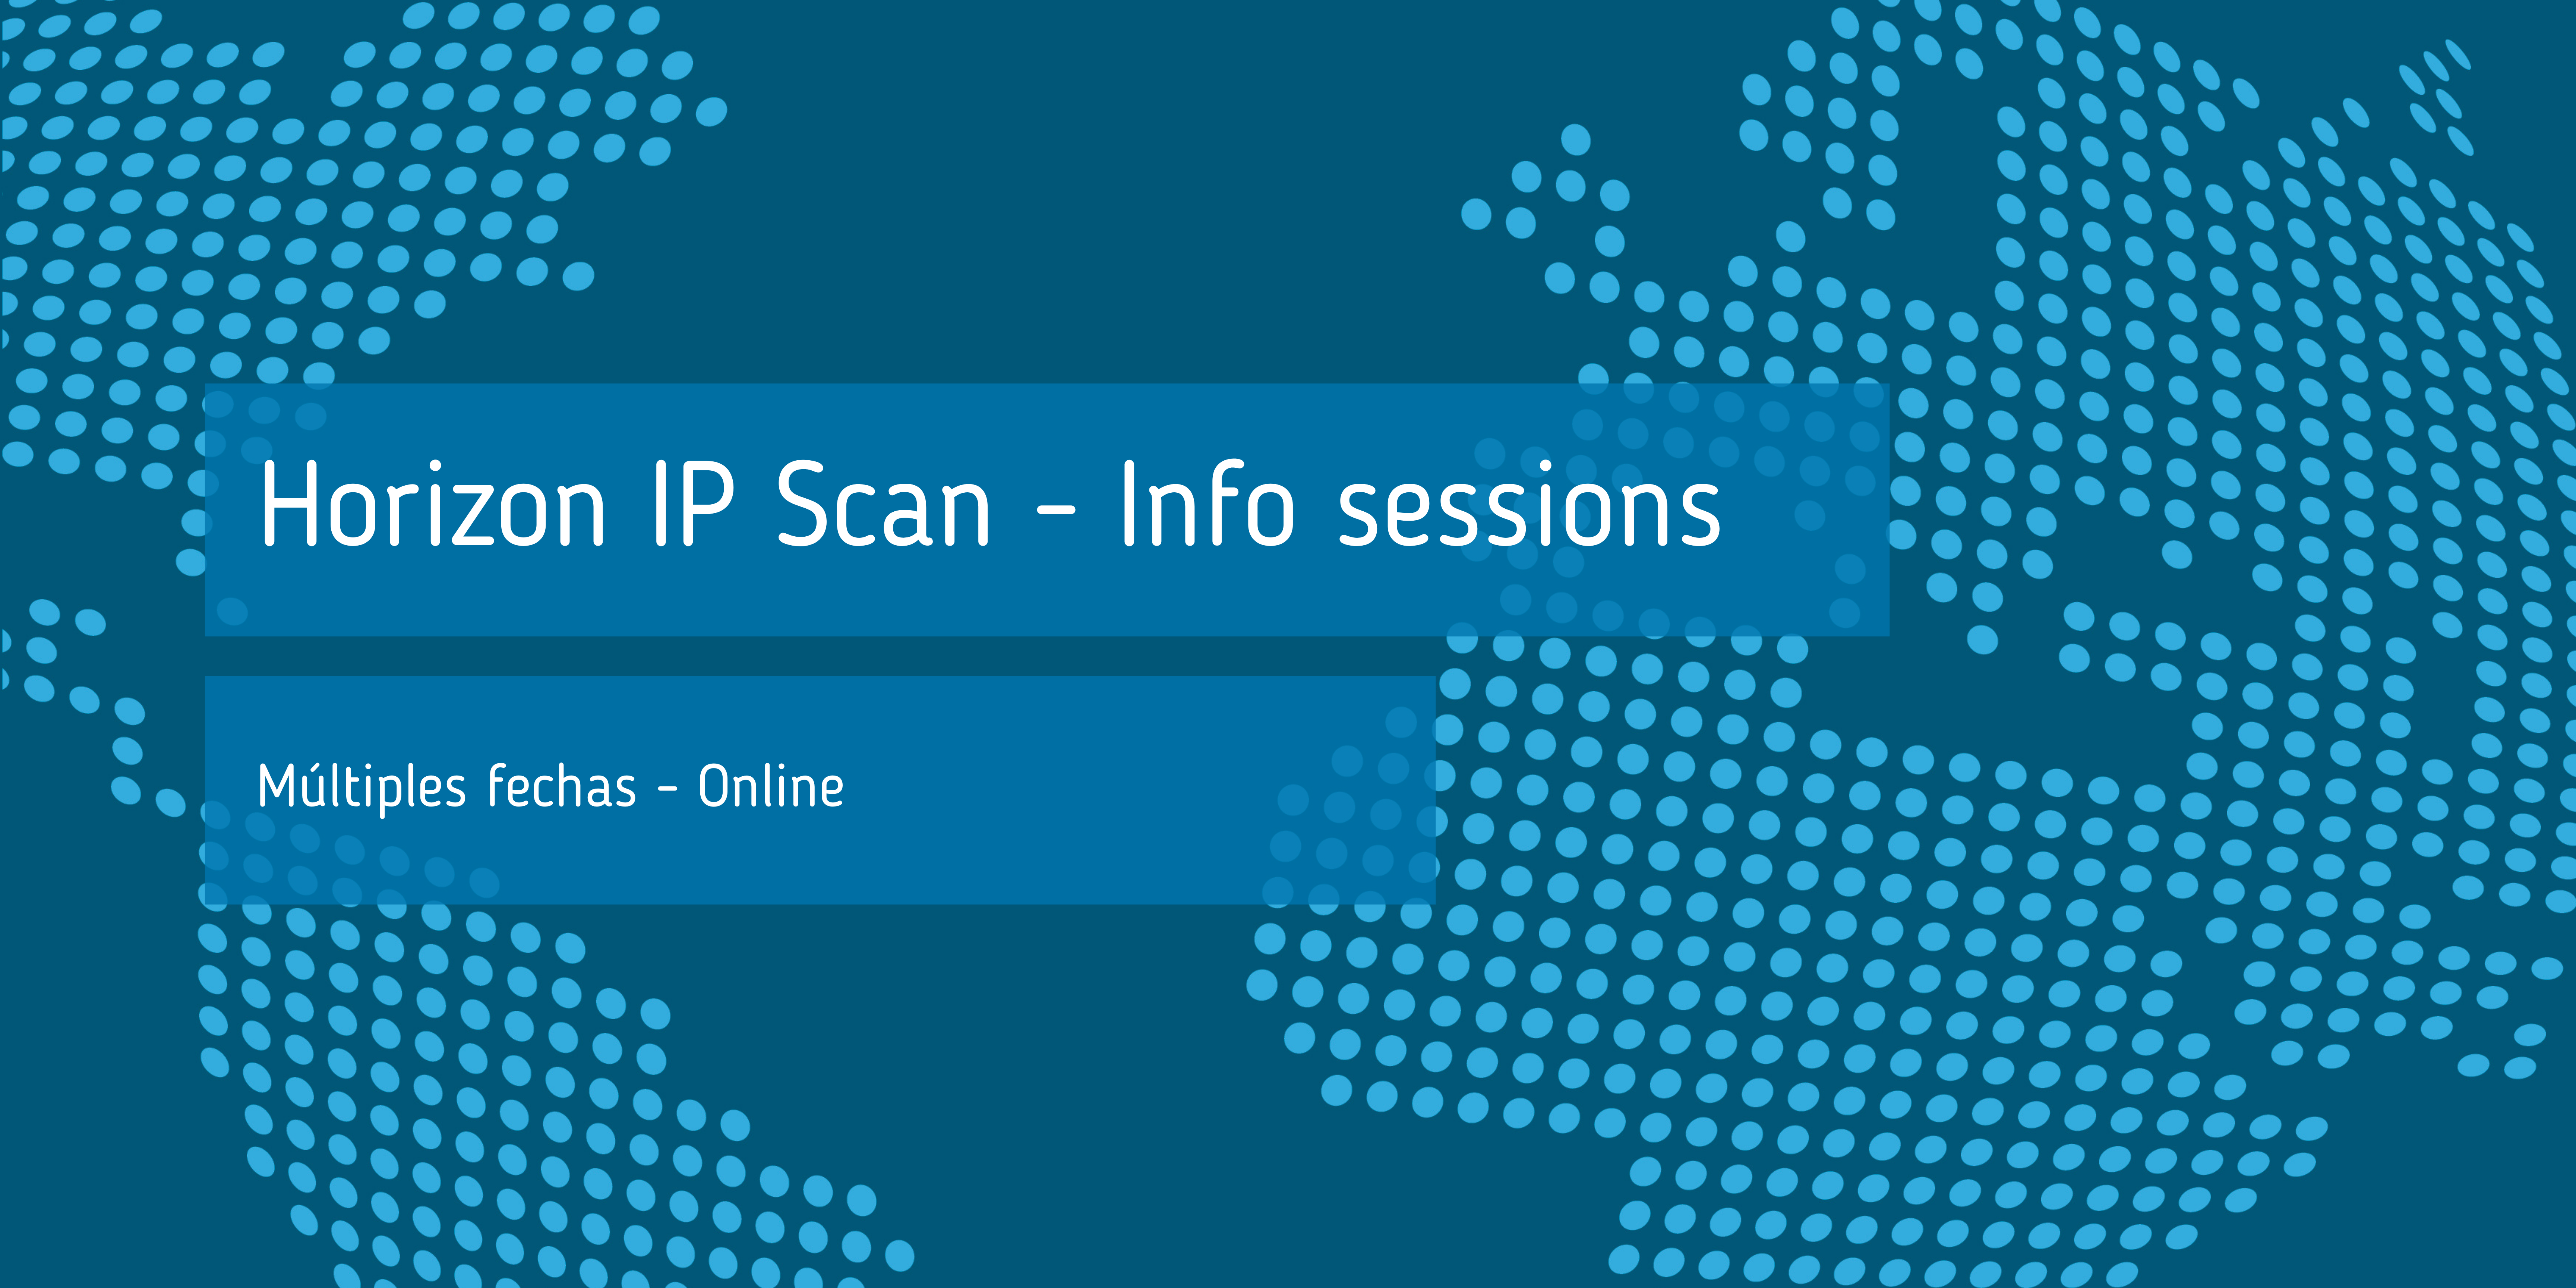 Horizon_IP_Scan_Info_sessions